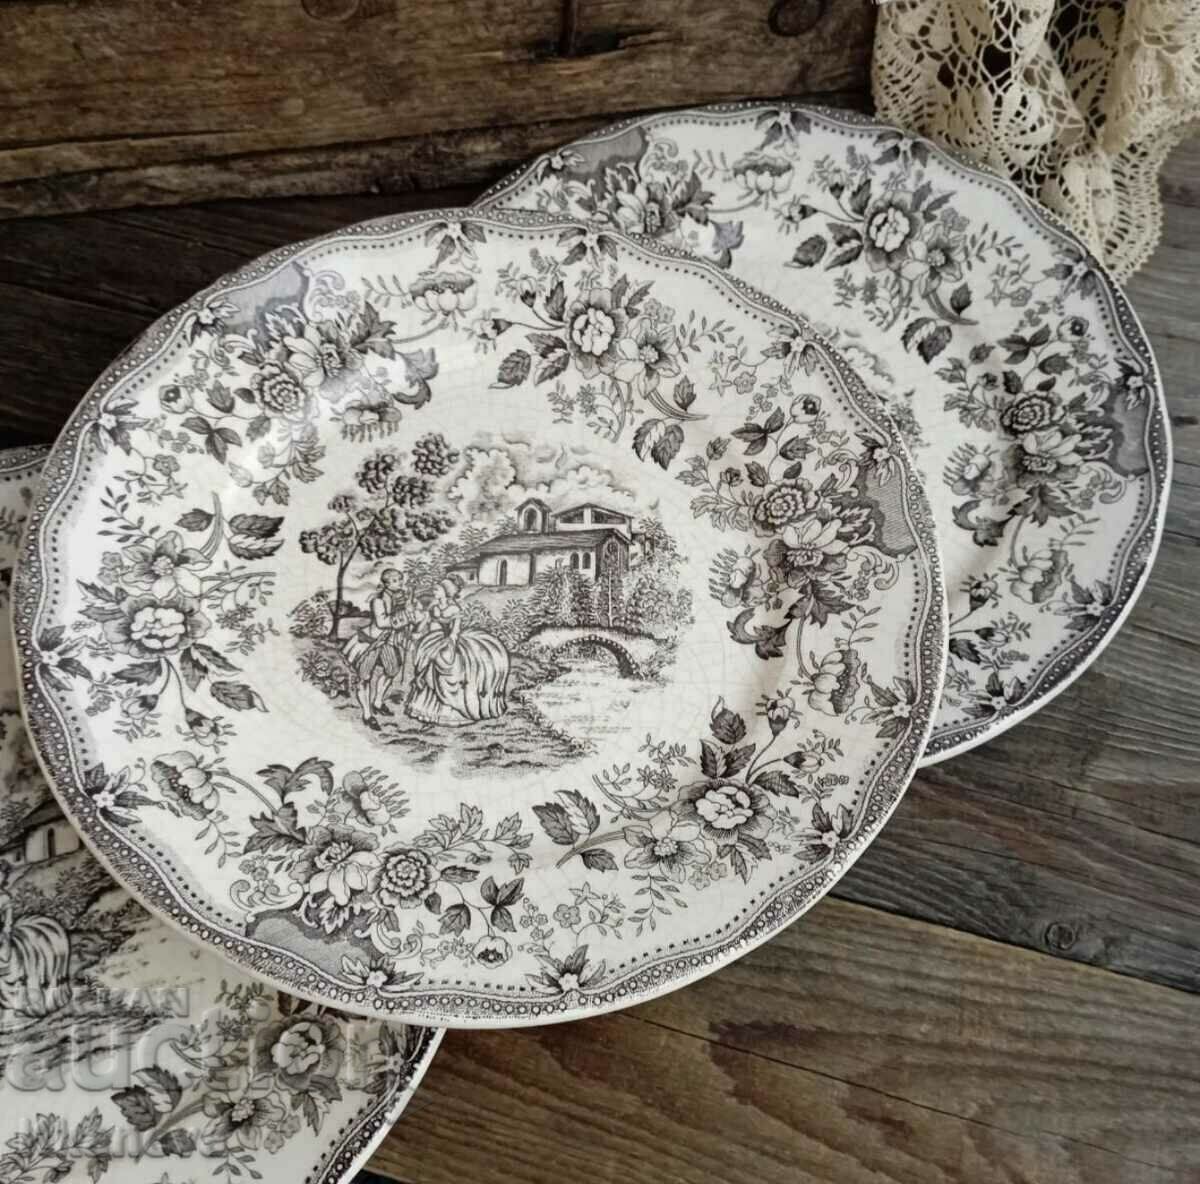 English porcelain plates